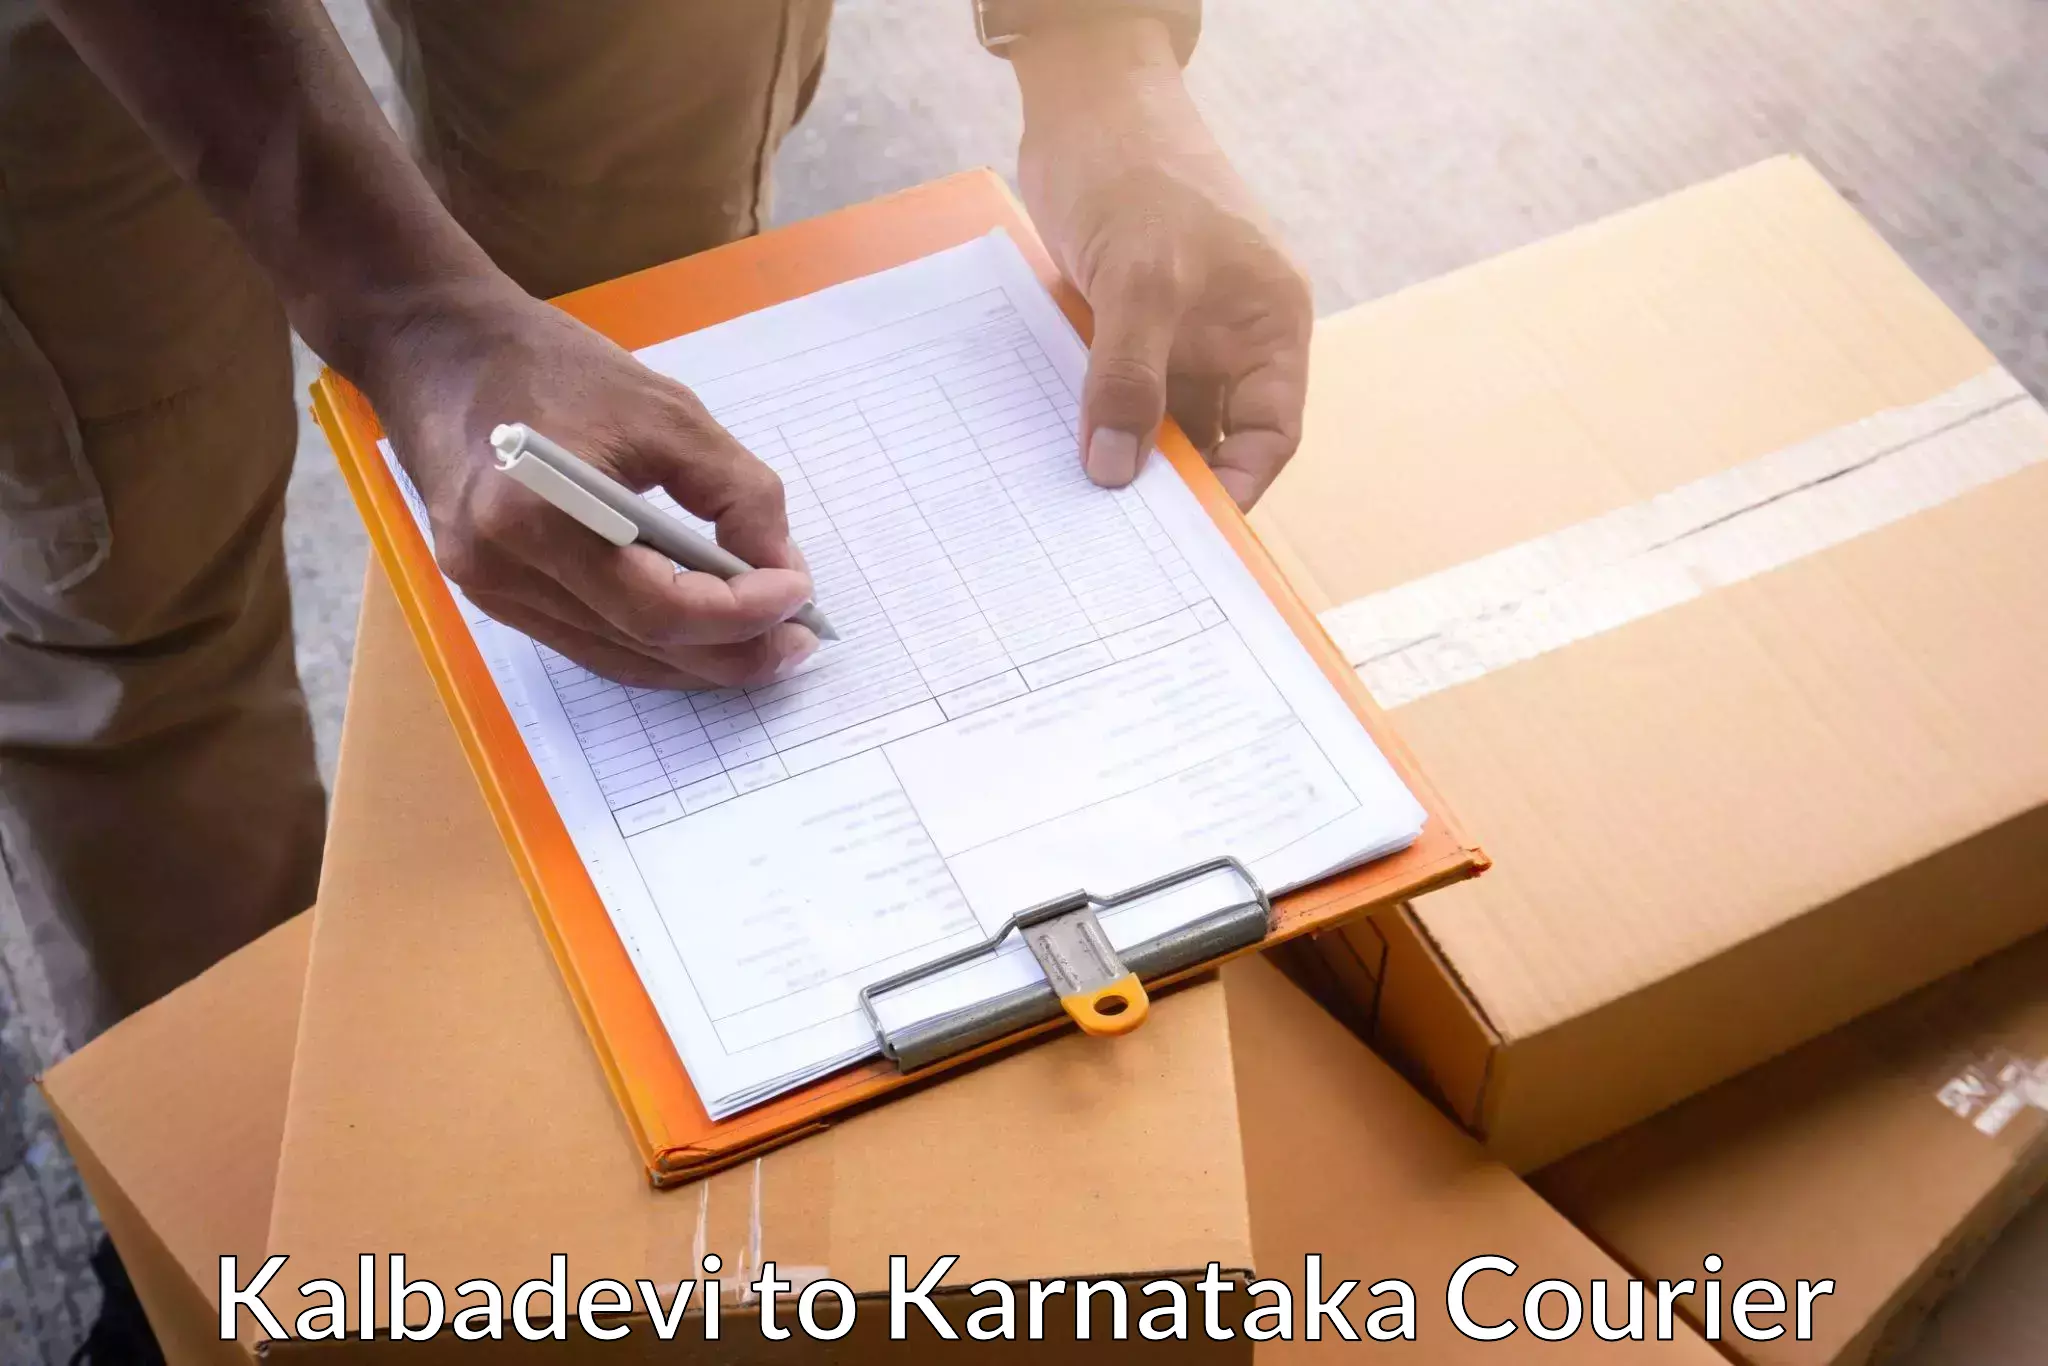 Delivery service partnership Kalbadevi to Bhatkal